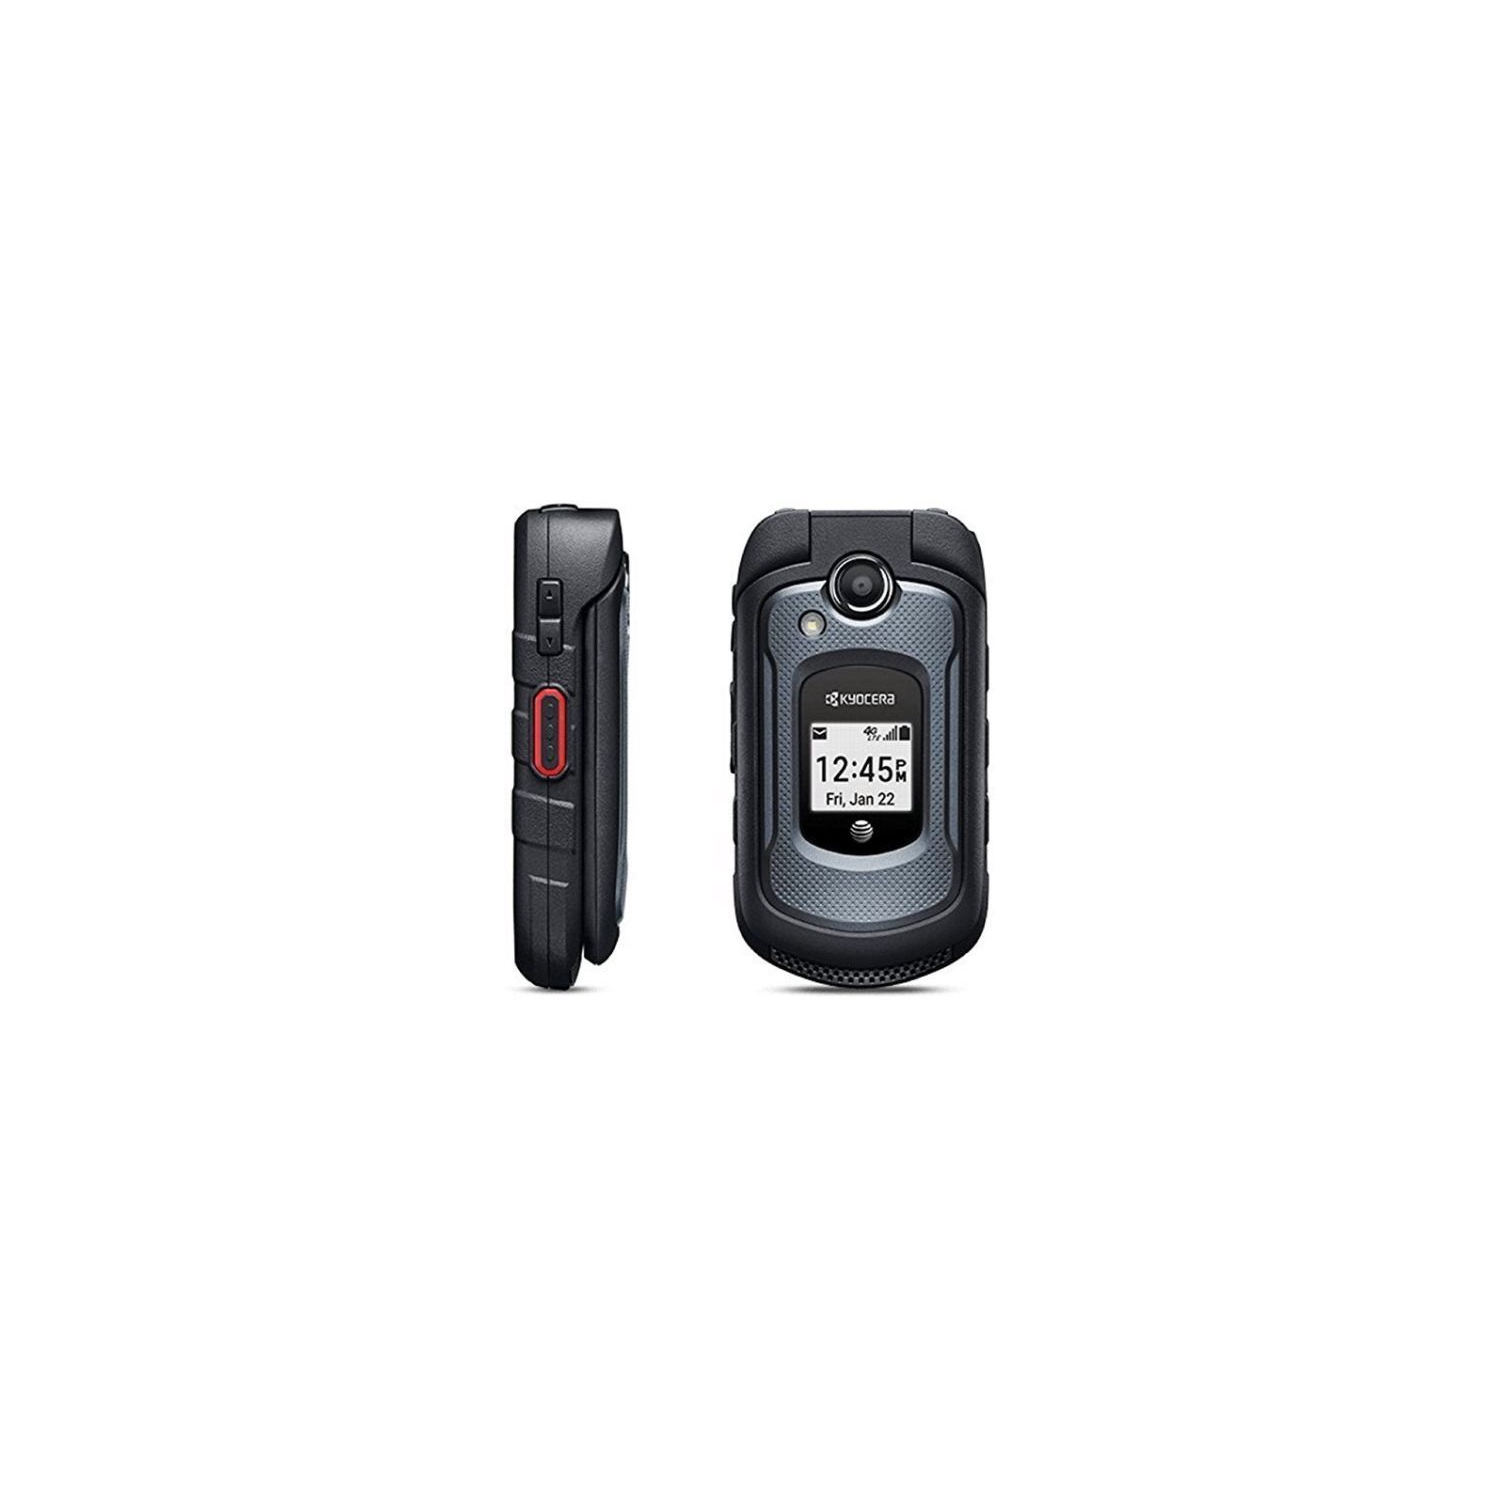 NEW-KYOCERA DuraXE Rugged Mobile Flip-phone E4710T 8GB LTE Black Unlocked Cellphone